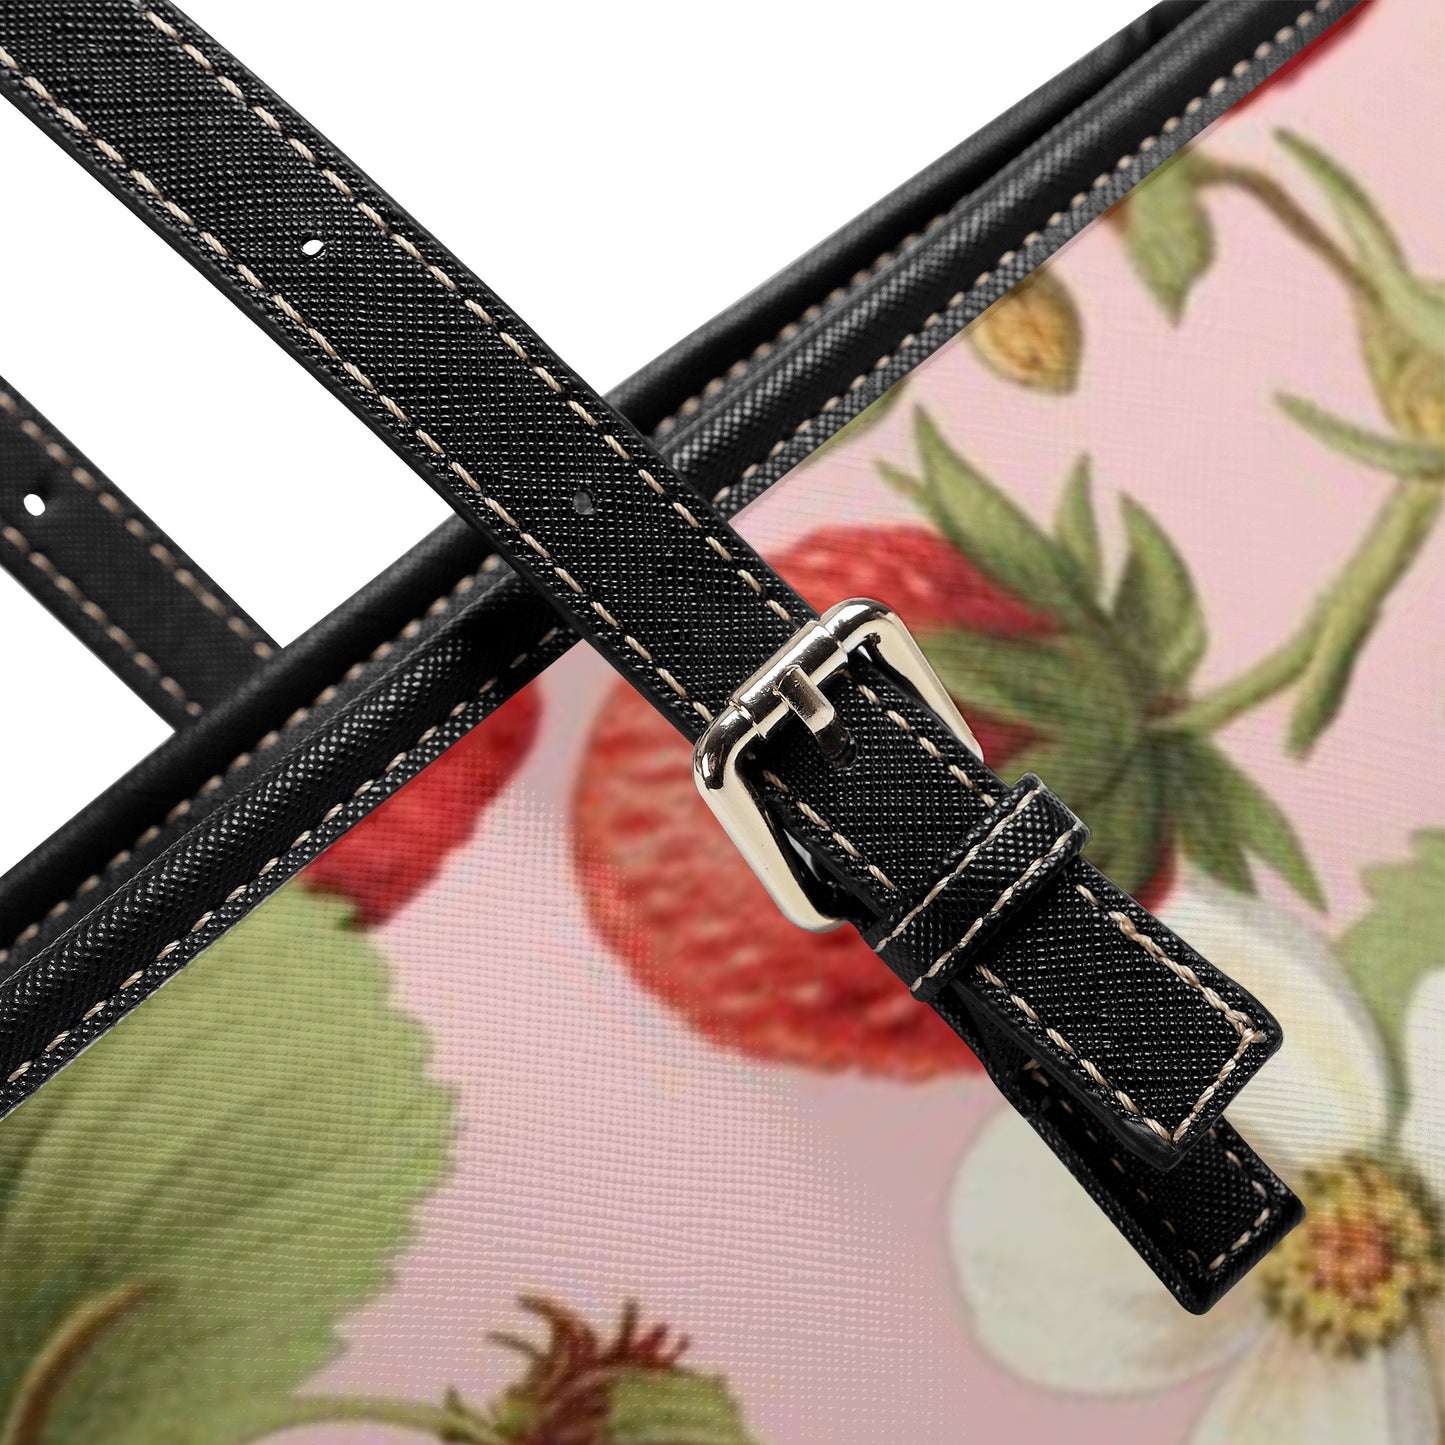 Strawberry Tote Bag Purse, Pink Floral Flowers Vegan Leather Print Handbag Women Zip Top Small Large Designer Handmade Shoulder